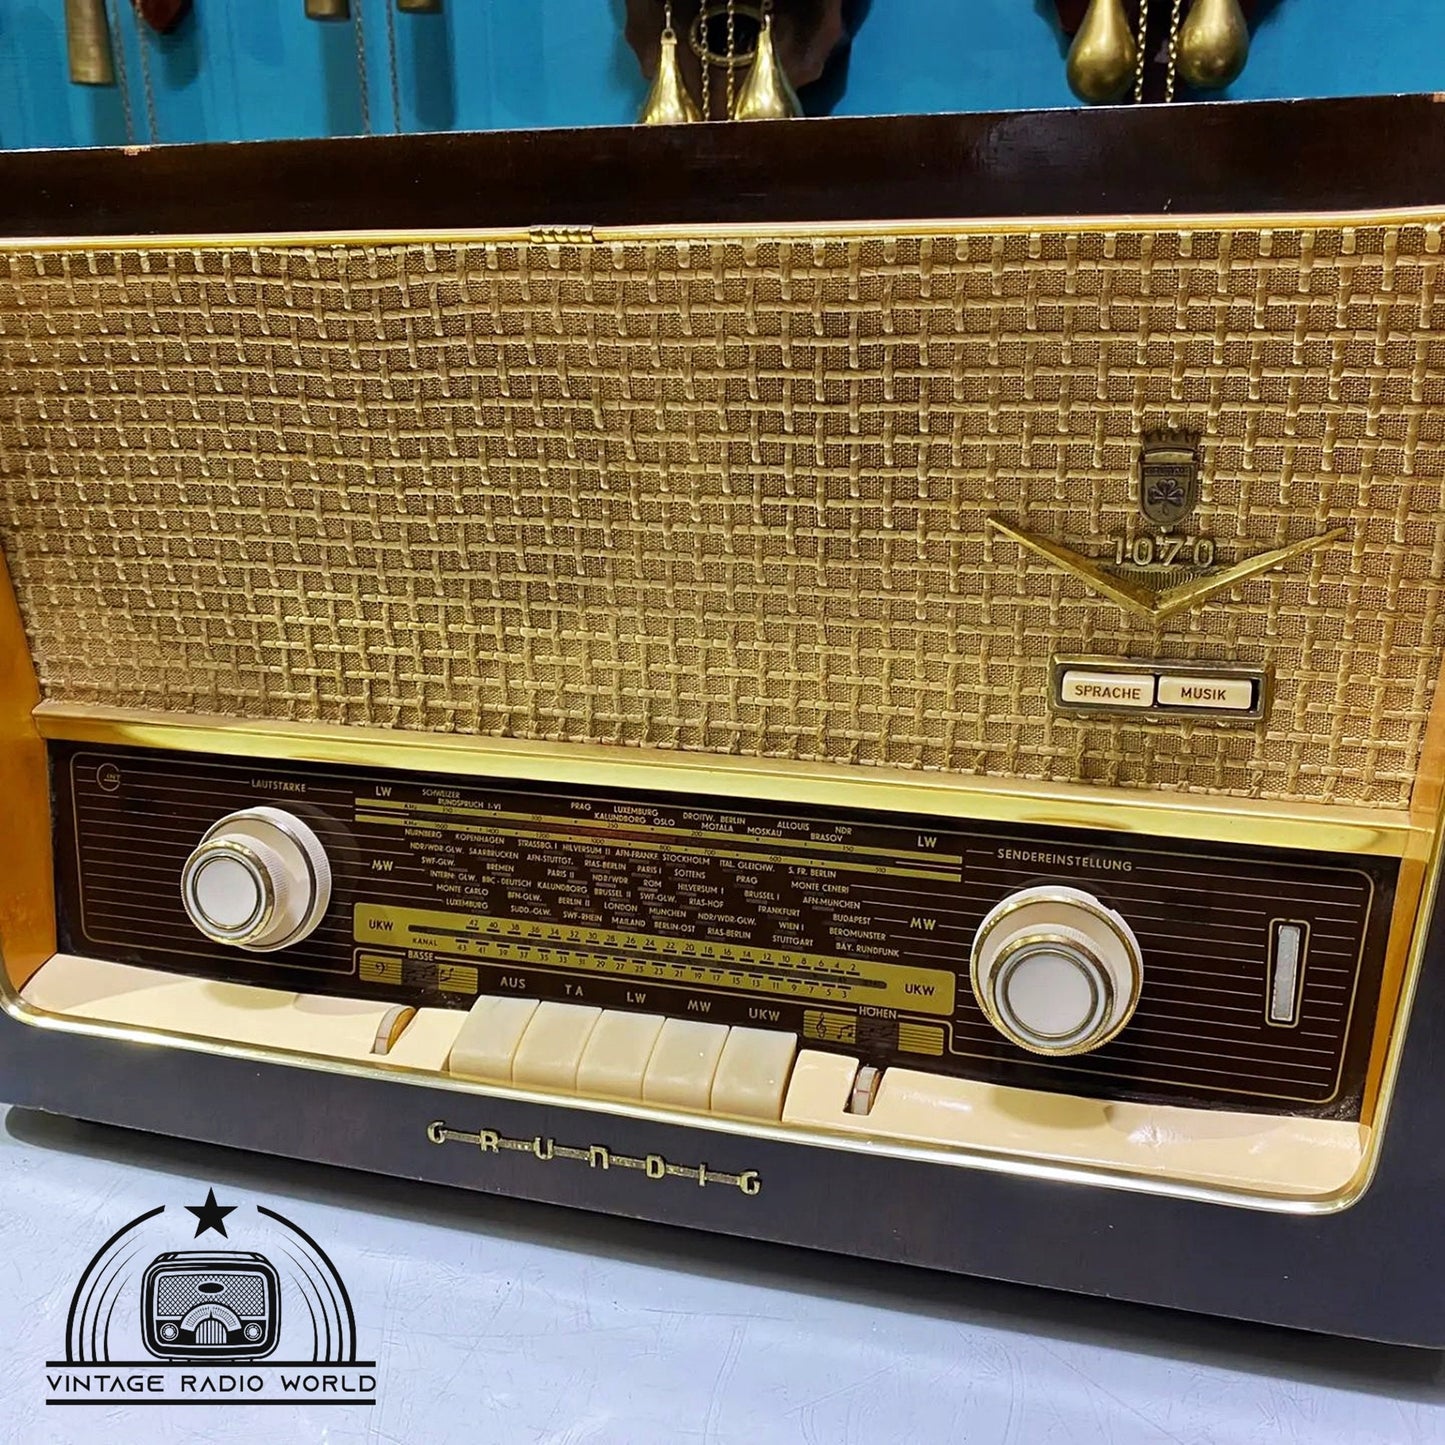 Step into Nostalgia - Grundig 1070 Vintage Radio with Originality and Lamp Radio Grace